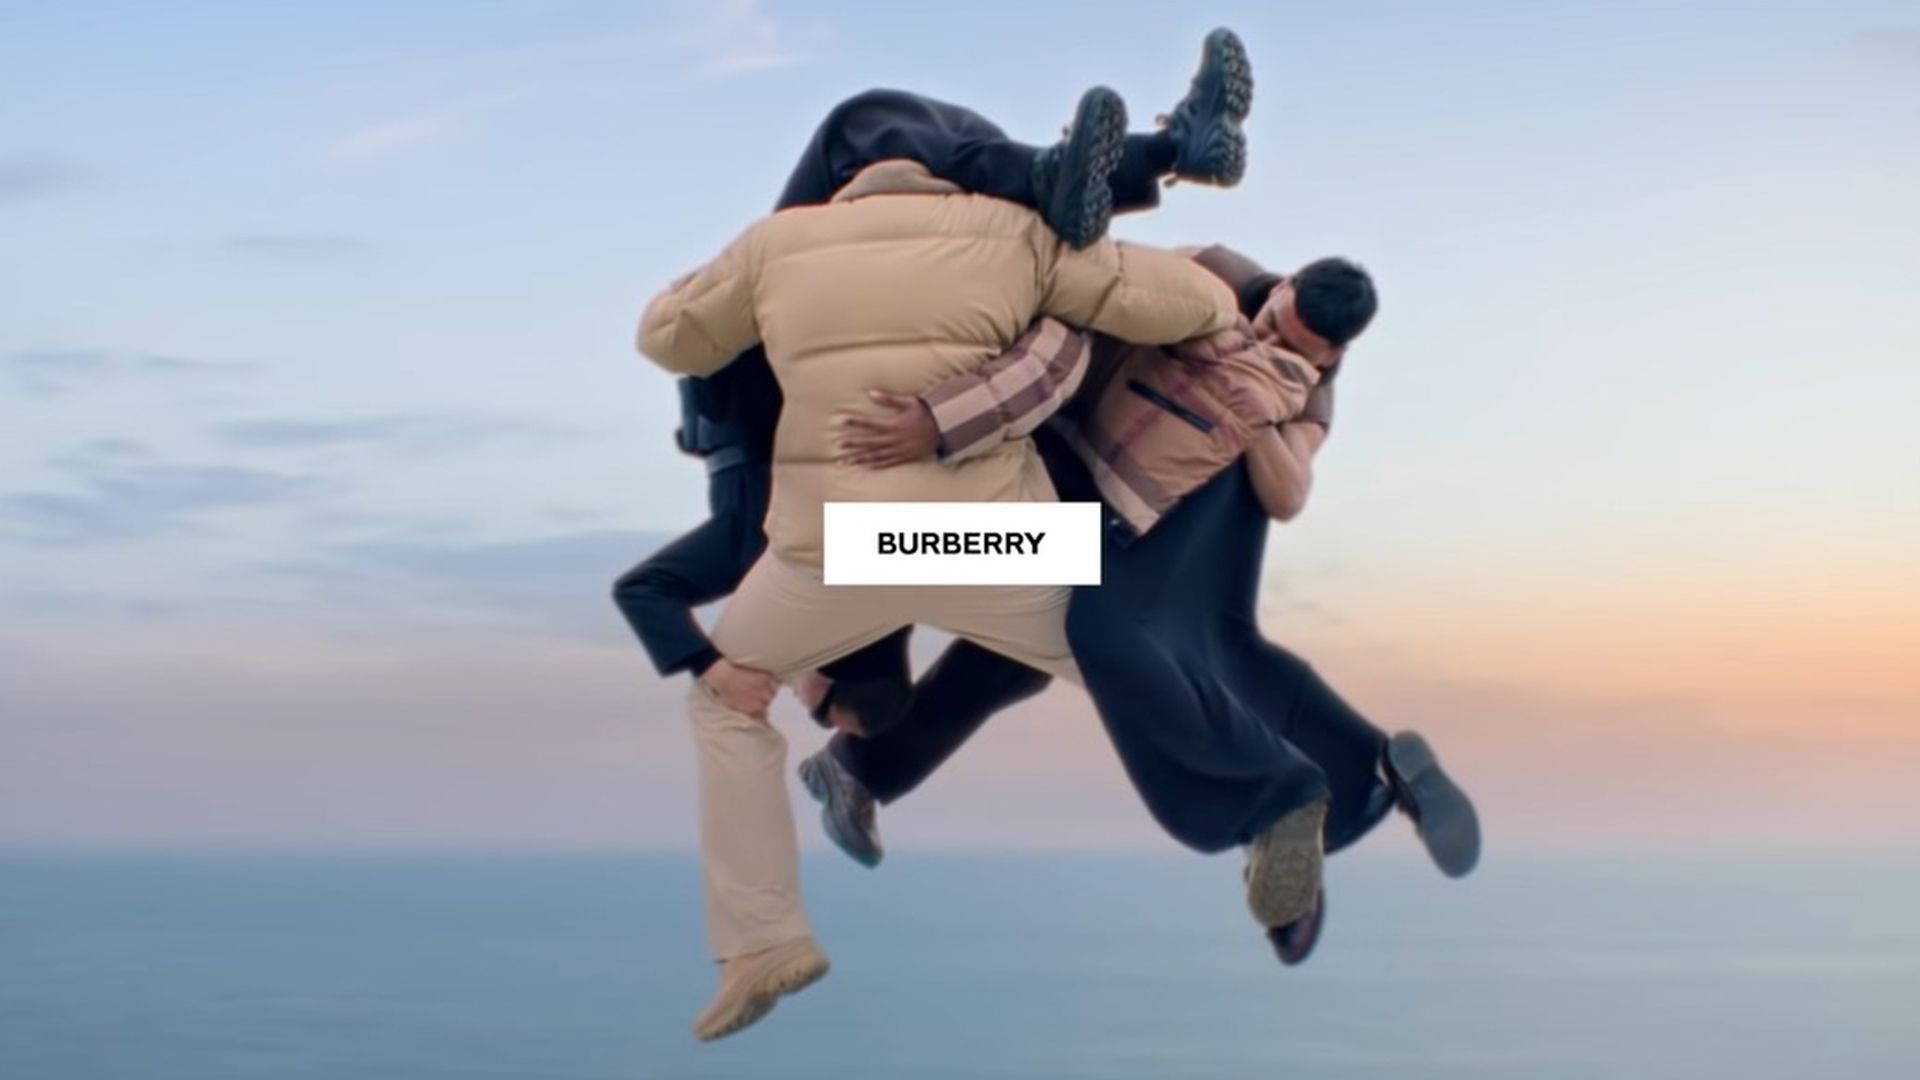 Burberry's bizarre new ad campaign inspires hilarious memes